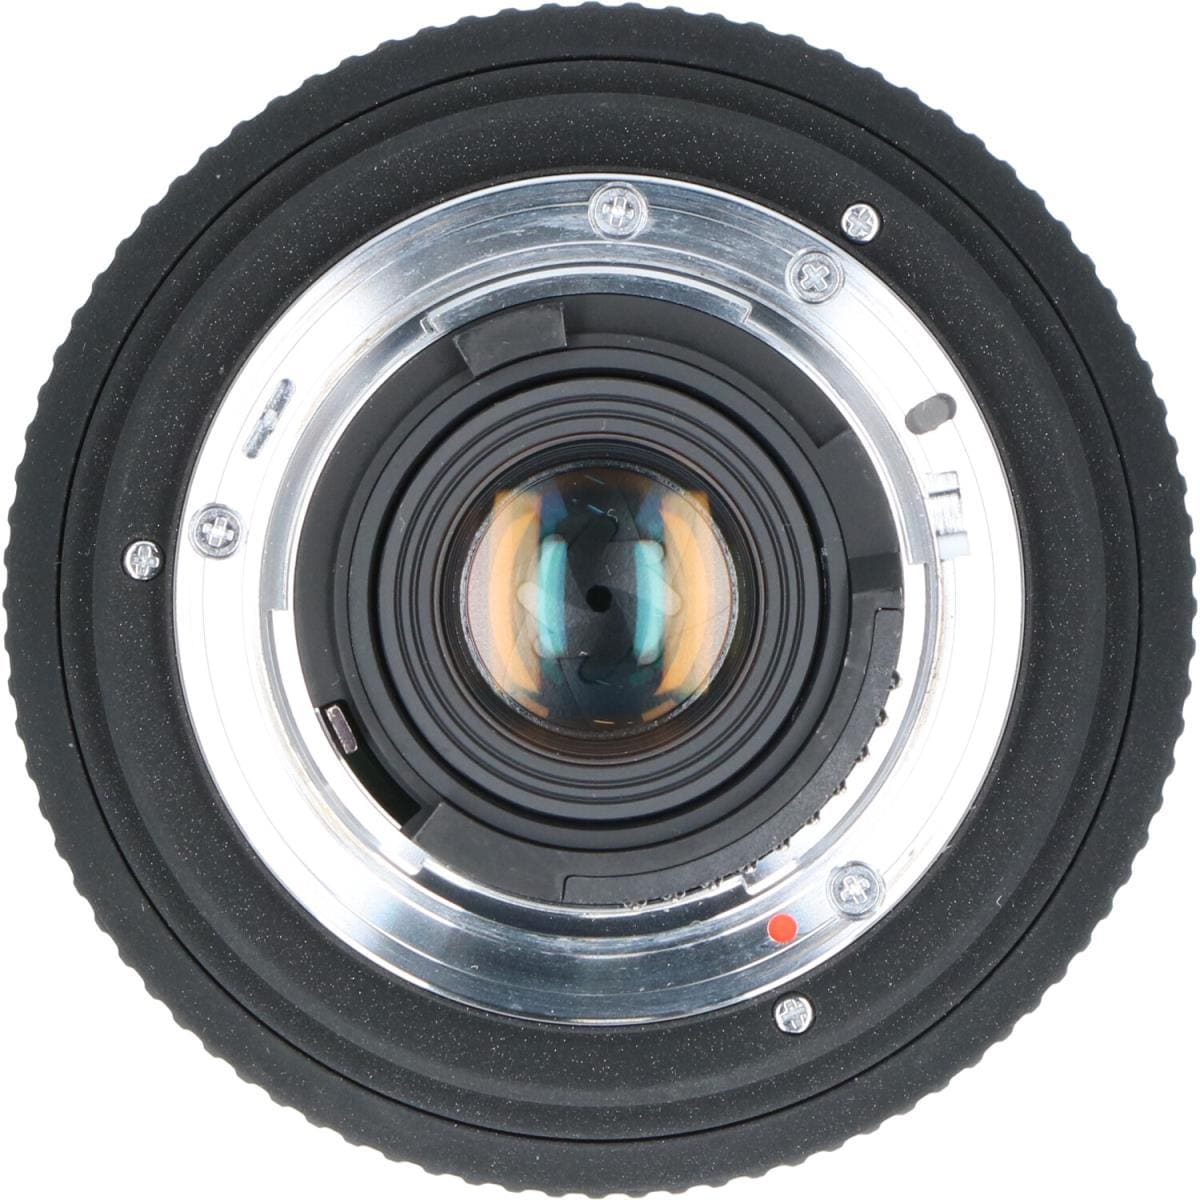 SIGMA Nikon 17-35mm F2.8-4EX DG HSM